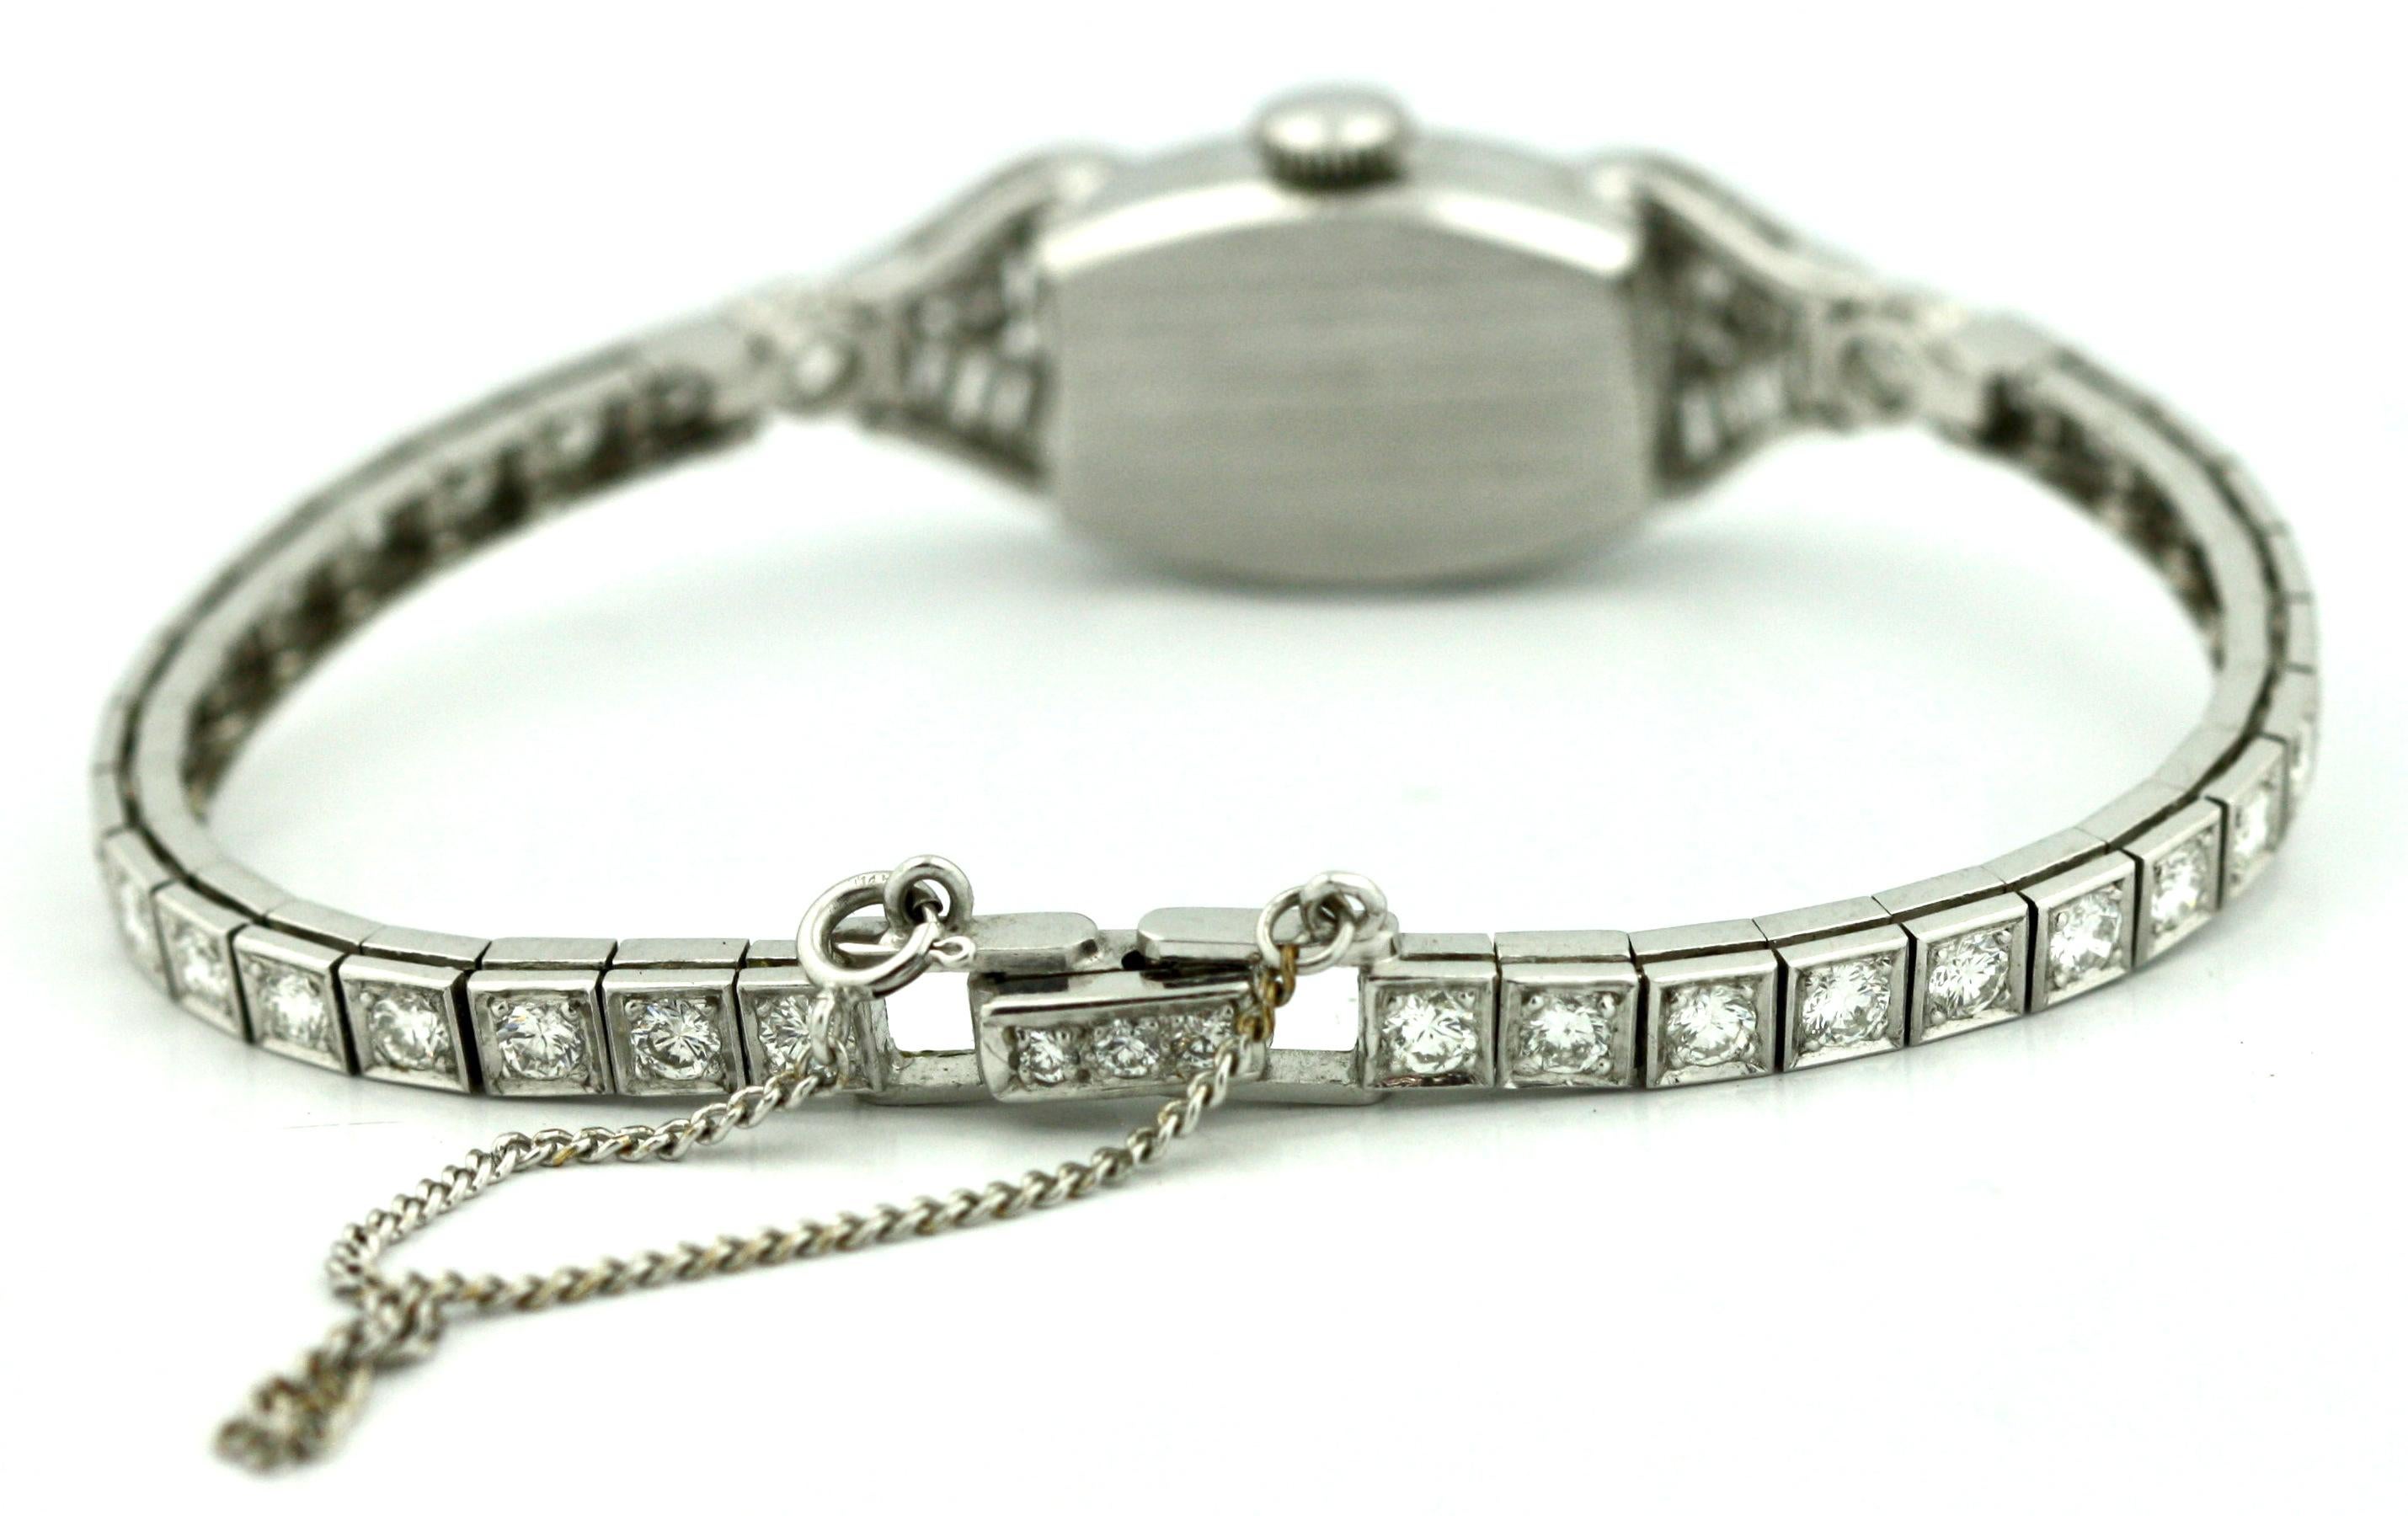 
Platinum and Diamond Bracelet Watch
Hamilton
diamonds approx. 3.10 cts., length 6 3/4 ins.
